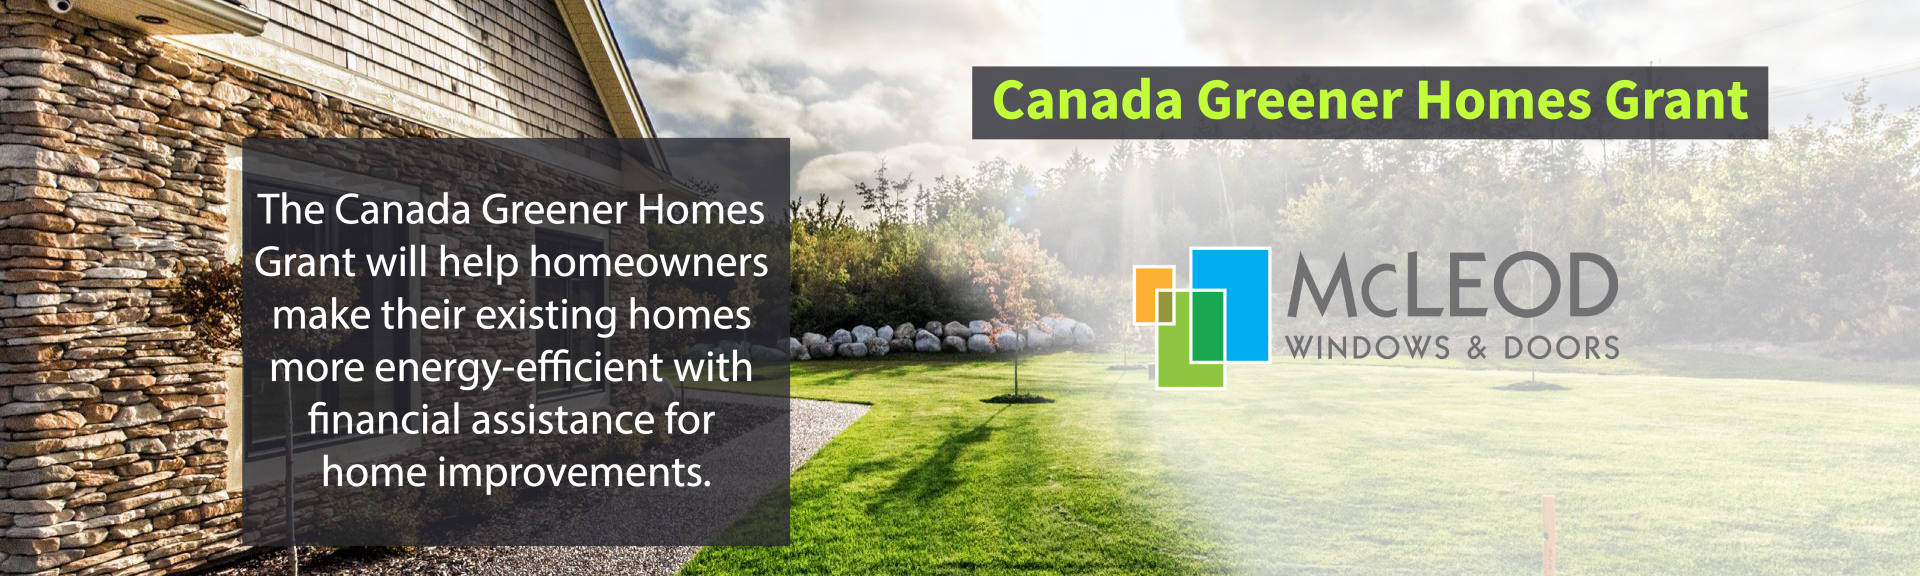 Canada Greener Homes Grant Website Slider 01 1